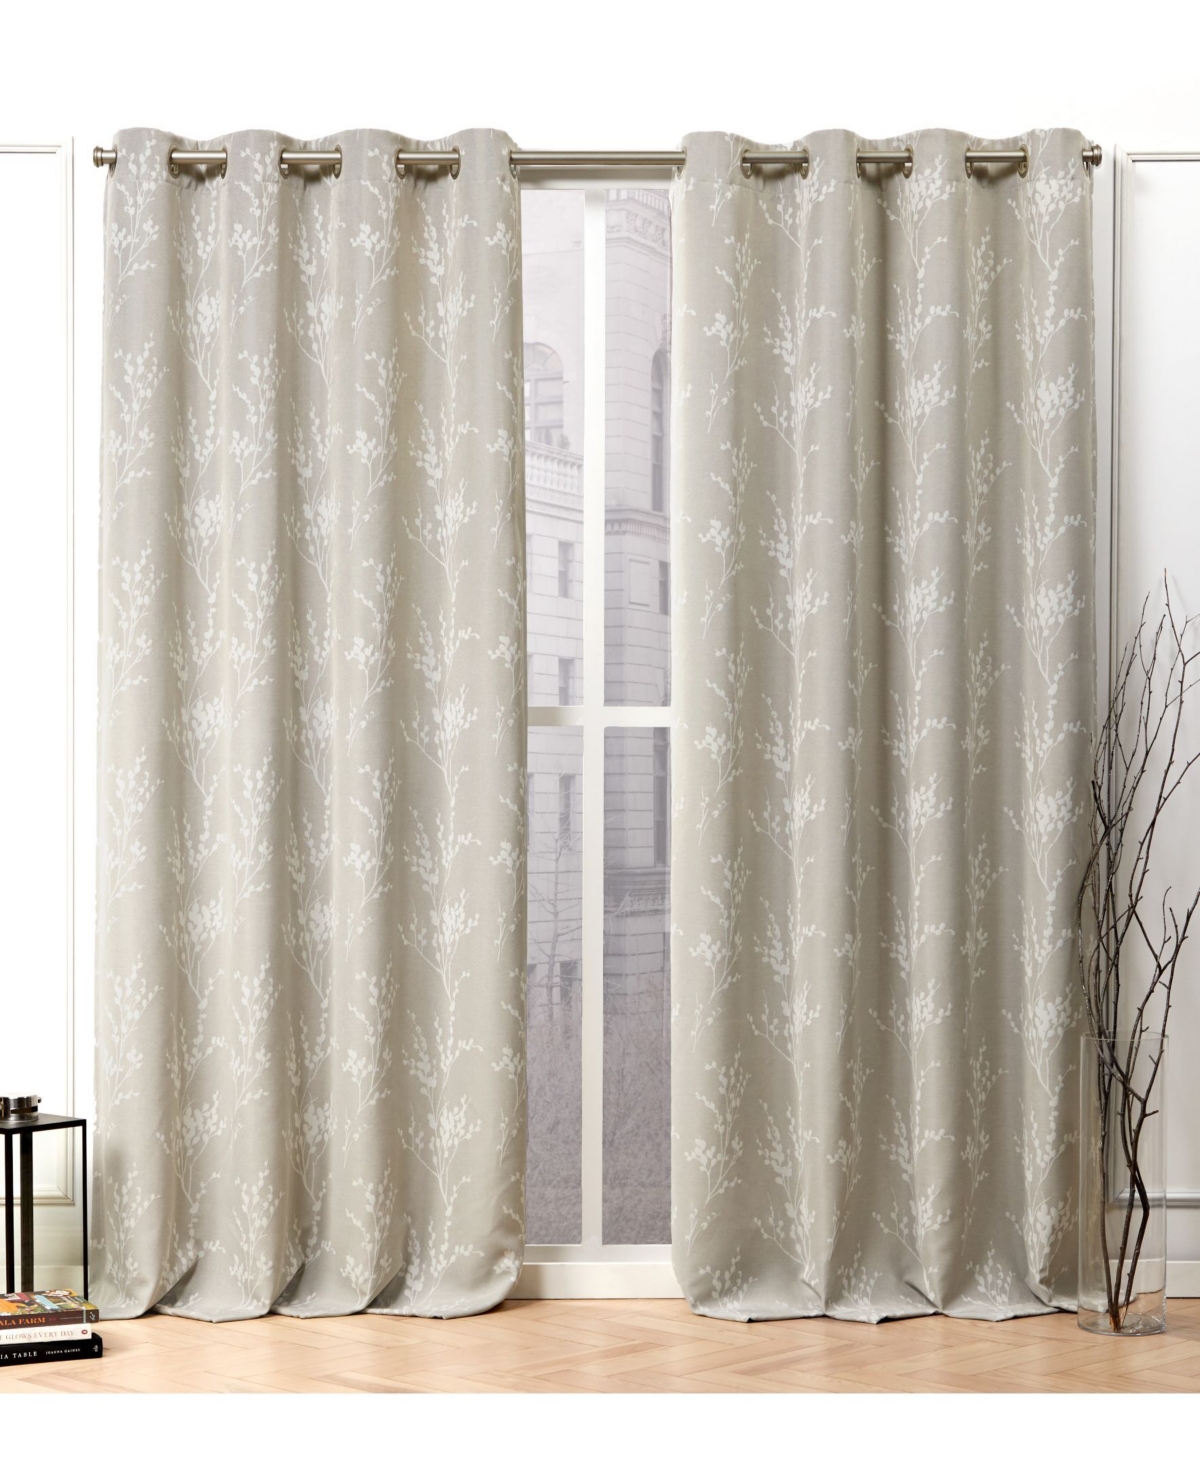 Turion Floral Blackout Grommet Top Curtain Panel Pair, 52" X 84" - Natural